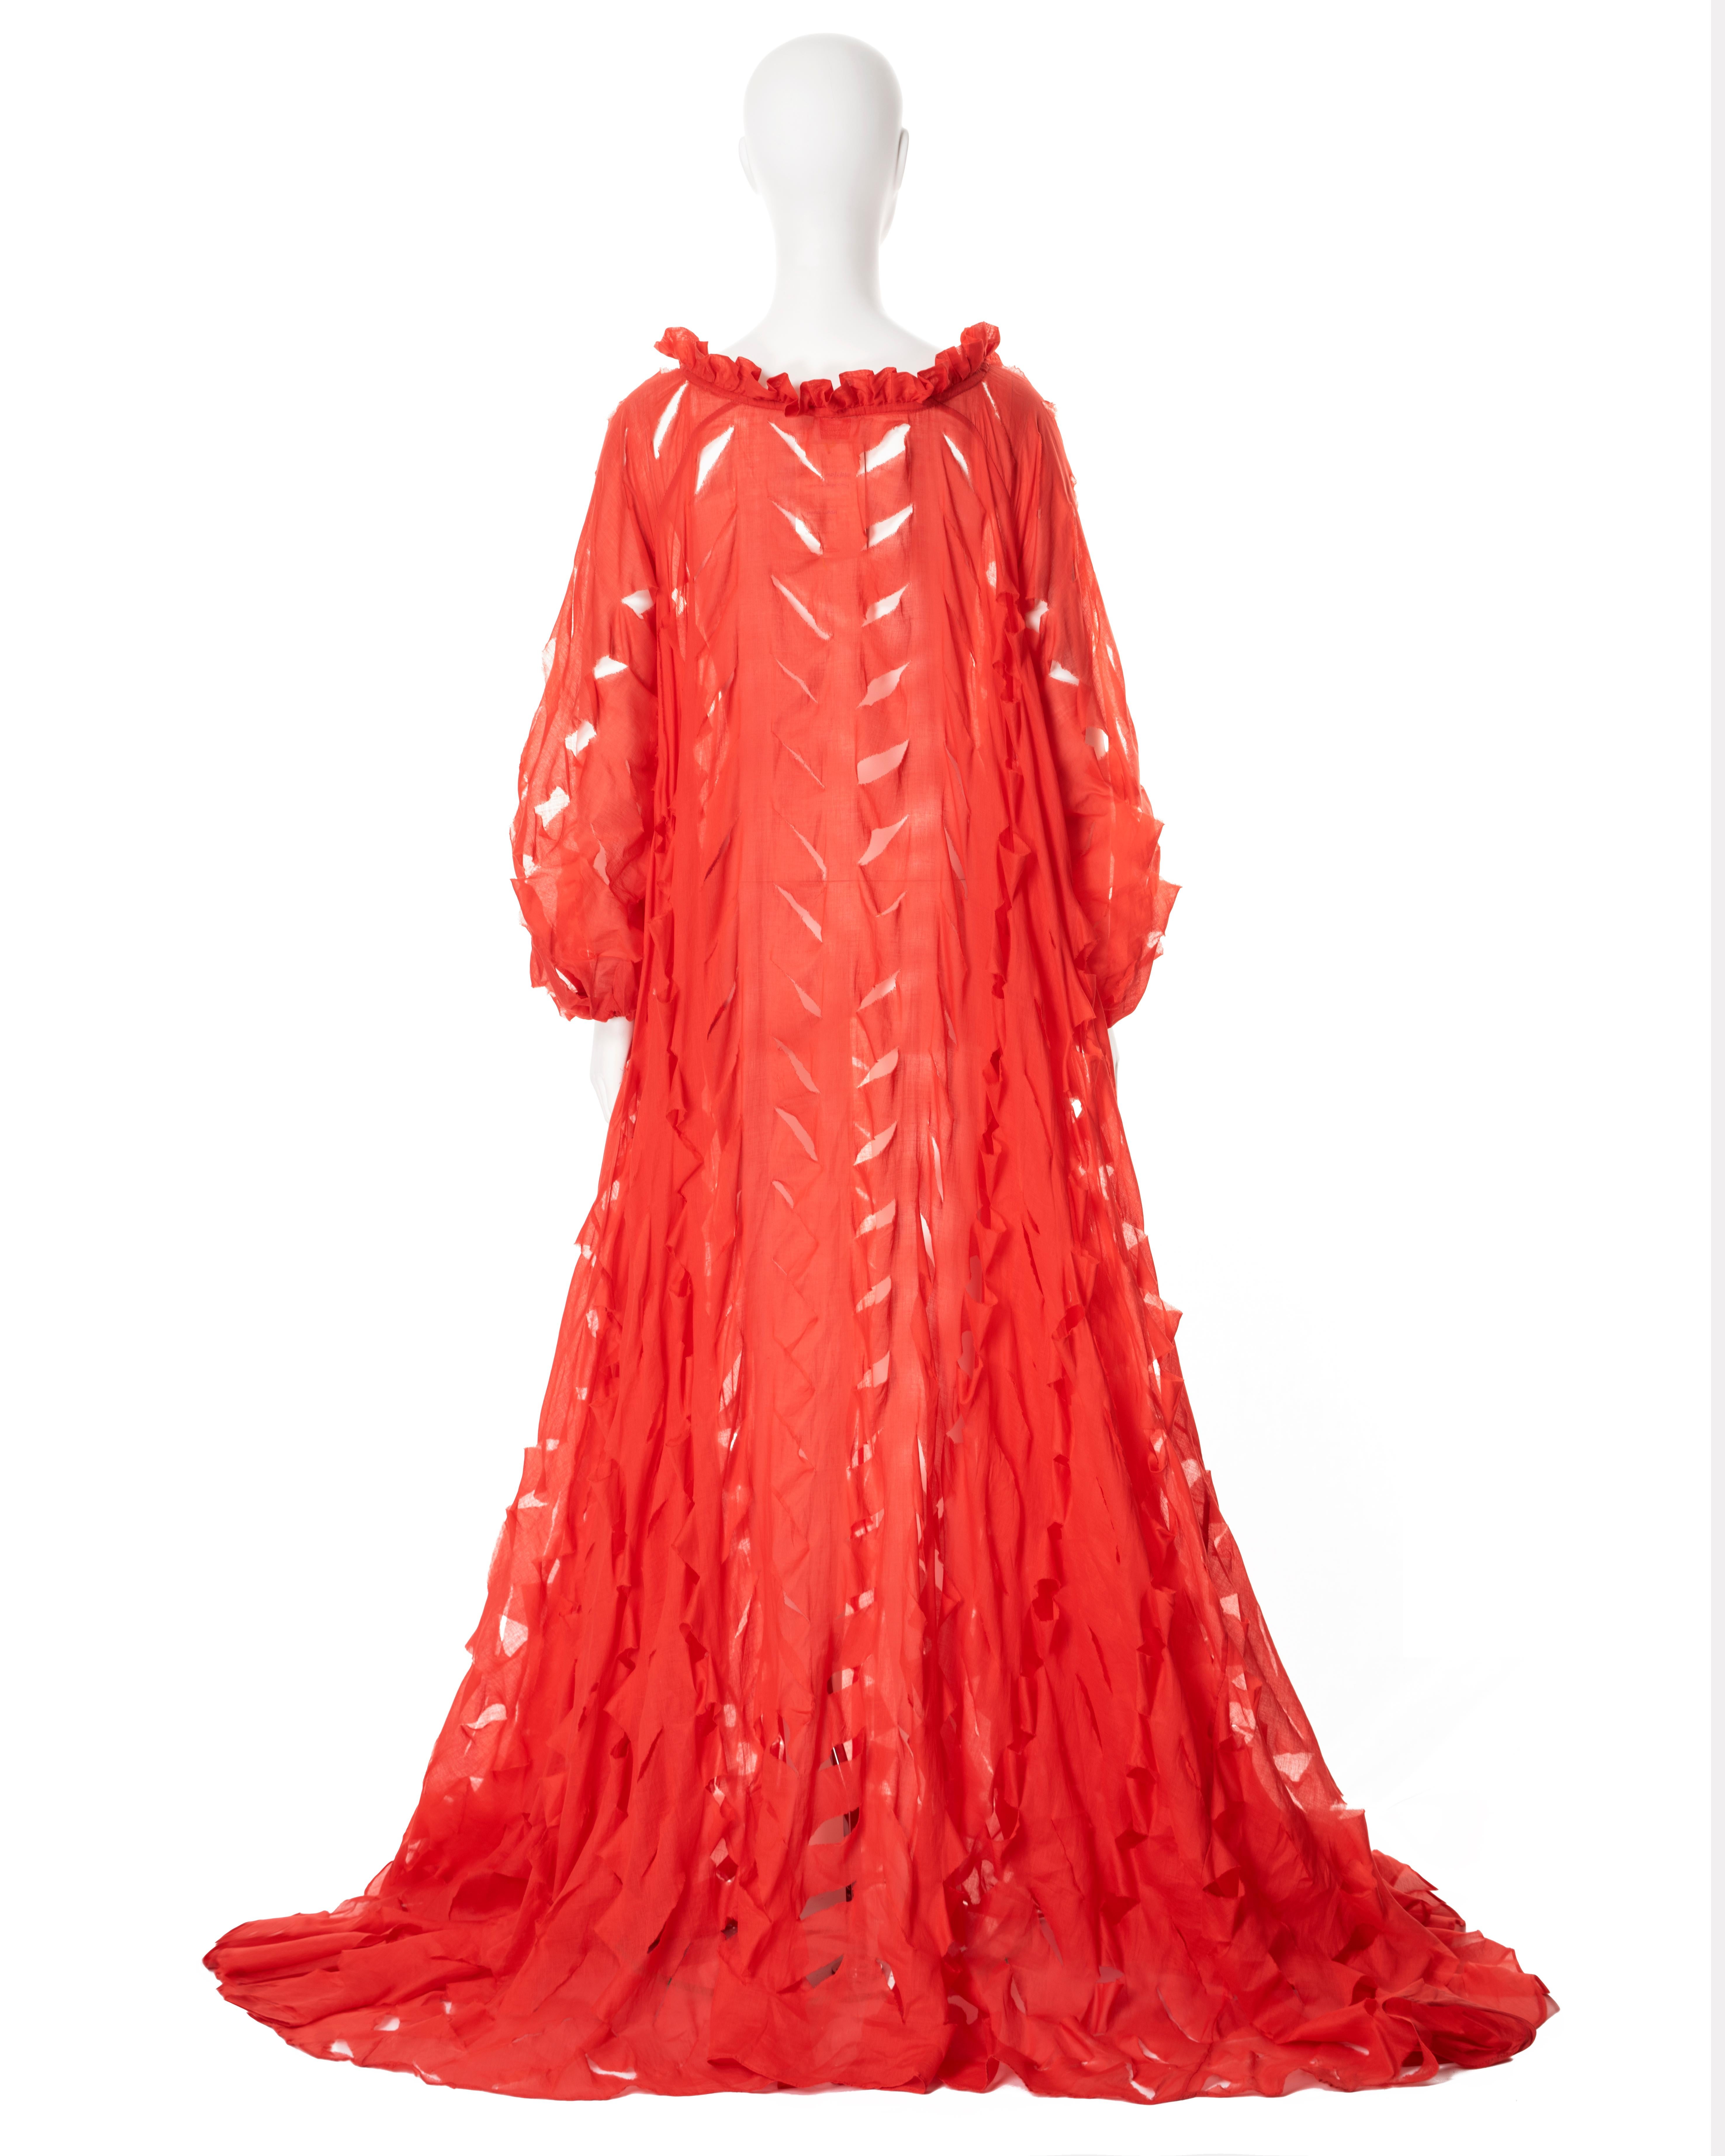 Vivienne Westwood hand-cut red cotton circle-cut dress, ss 1991 For Sale 7